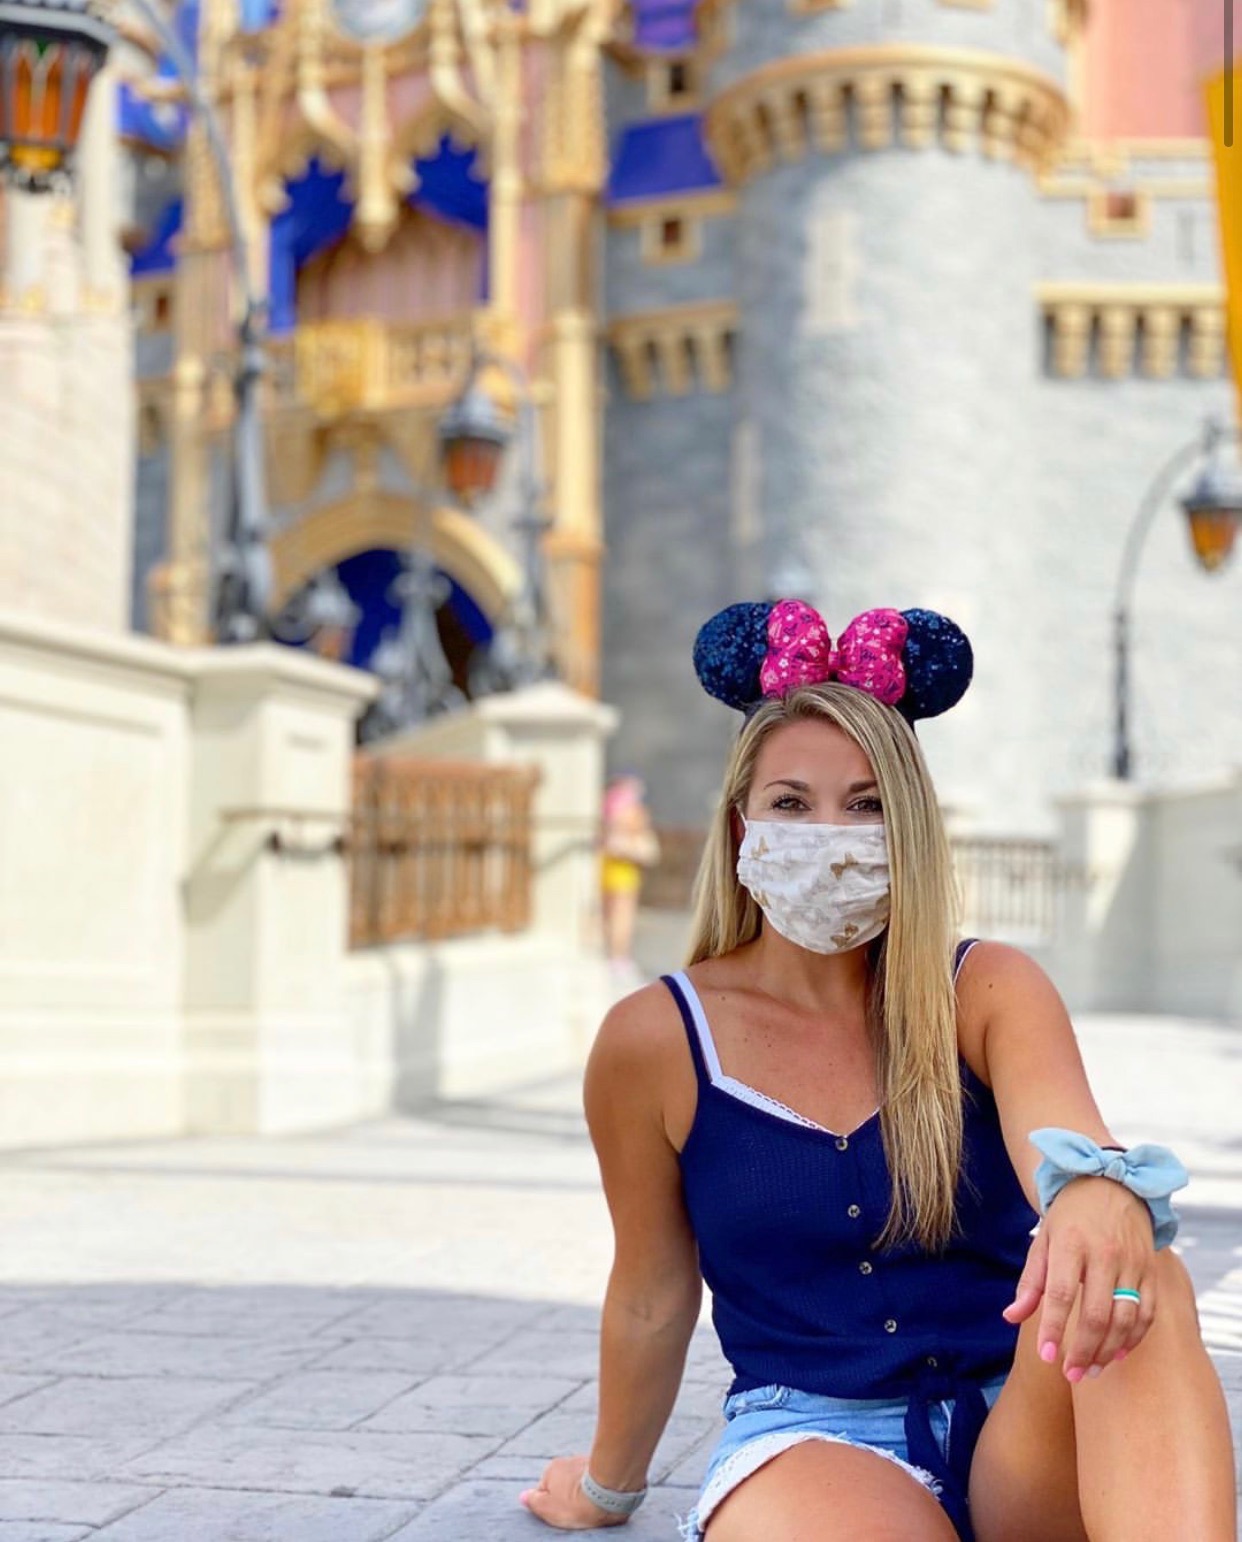 Masks at Disney image